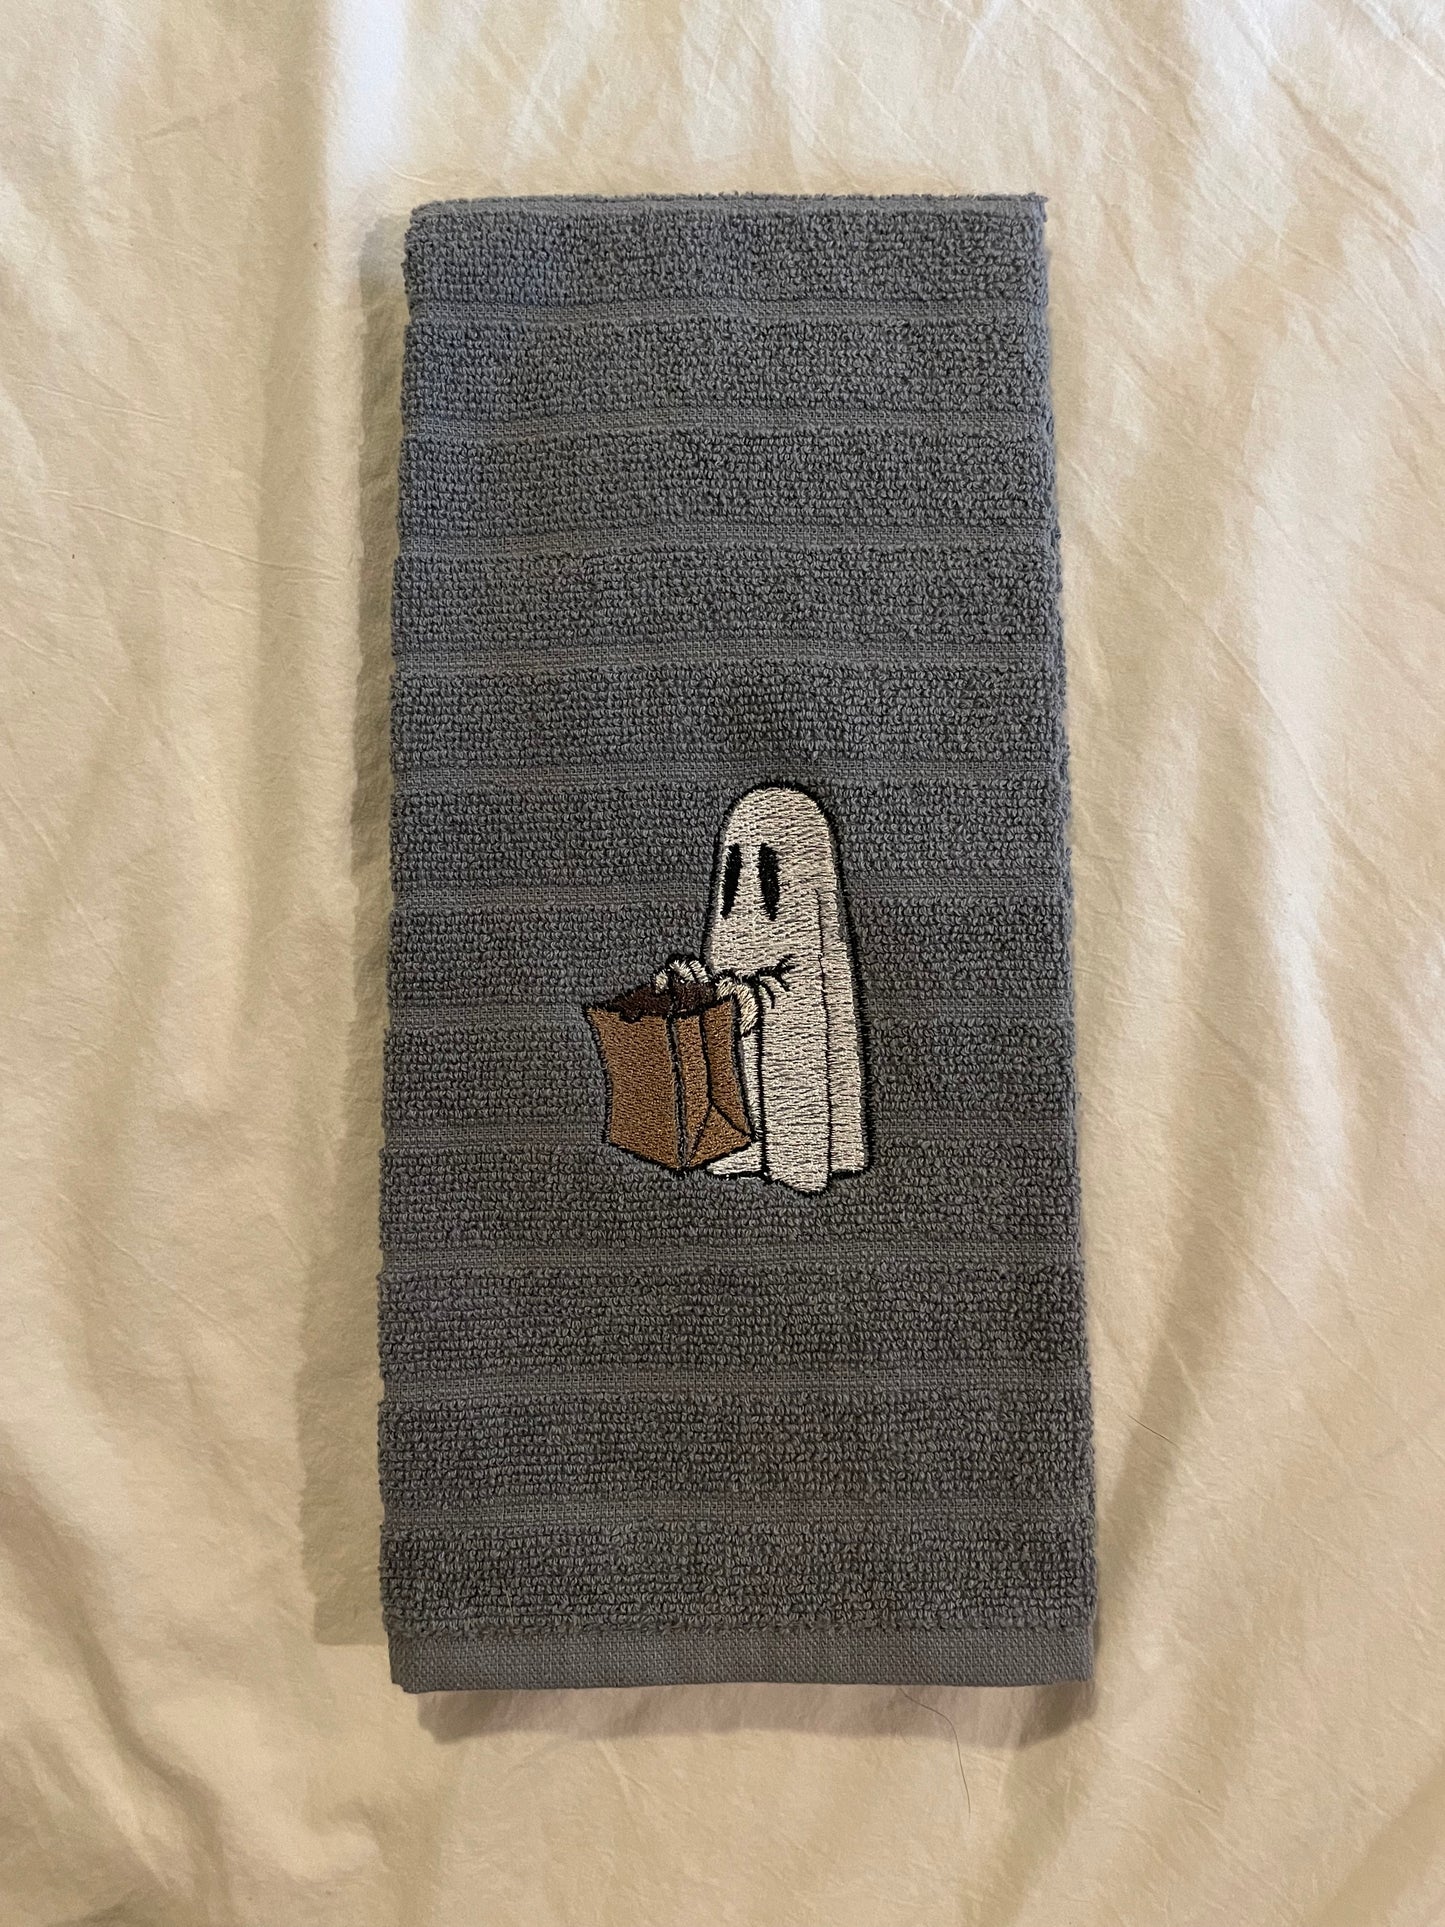 Decorative Peanuts Hand Towel